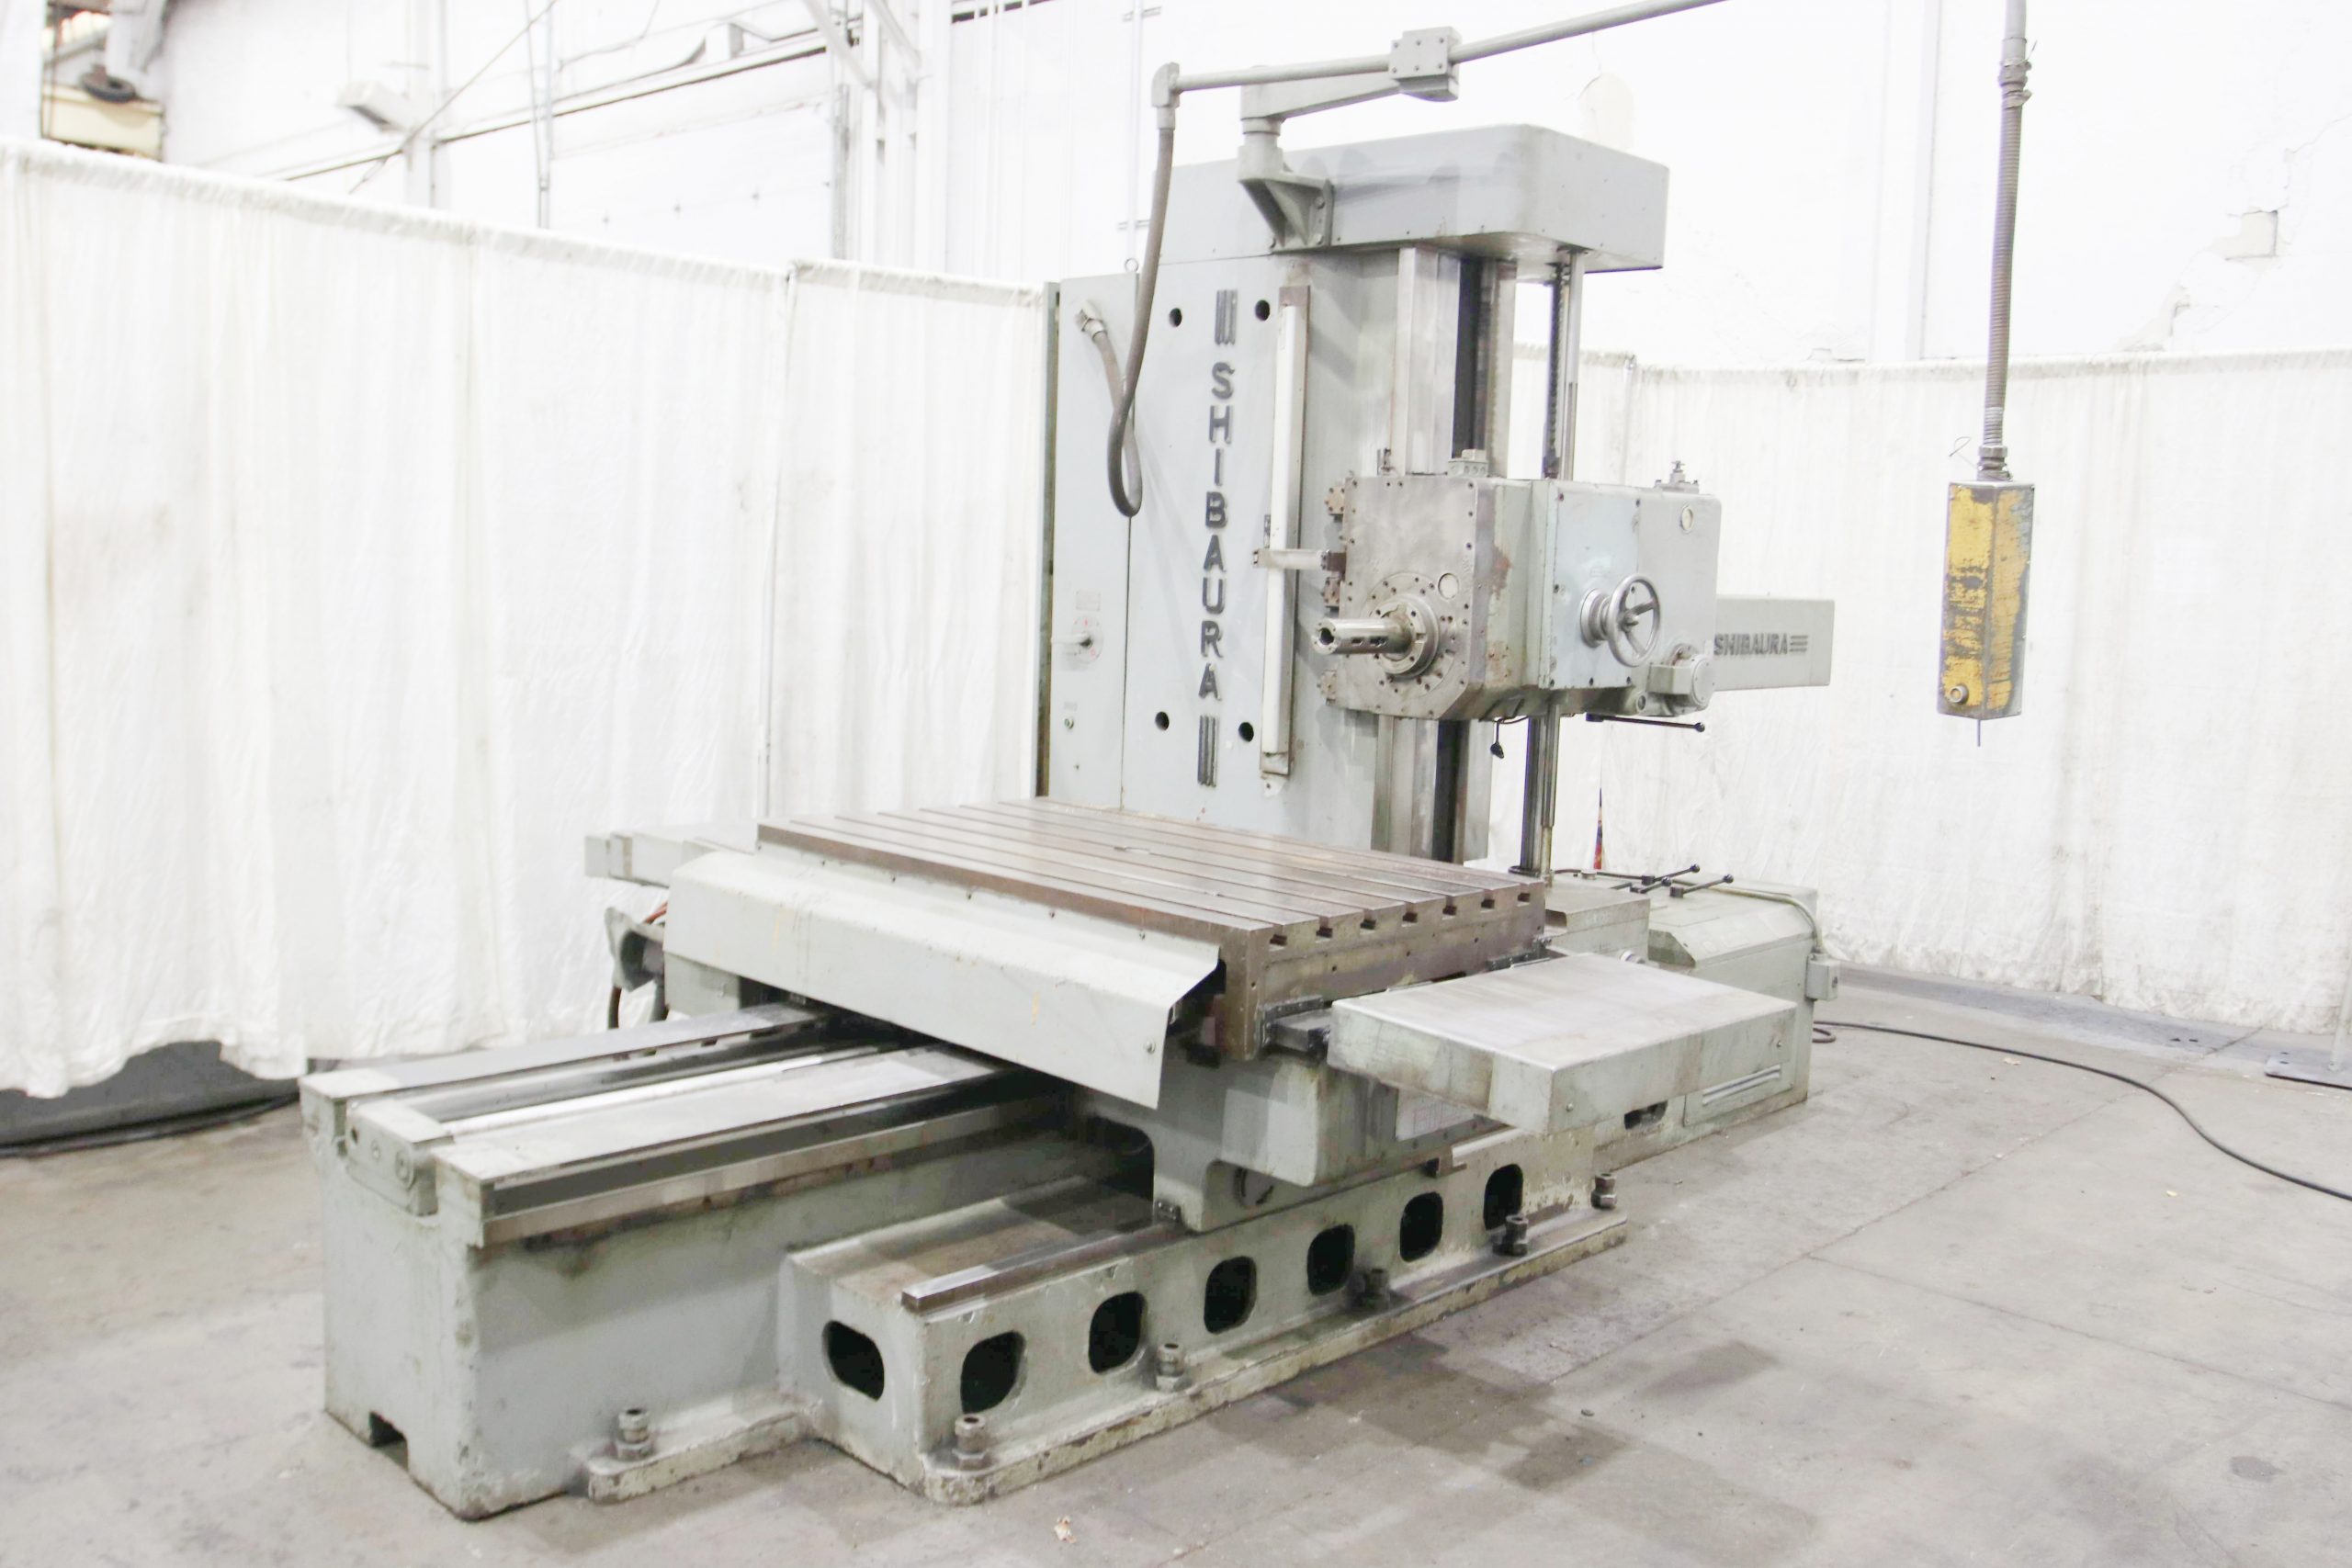 Shibaura Model #BFT9 Horizontal Table Type Boring Mill (used) Item # UE-102821L (Ohio)